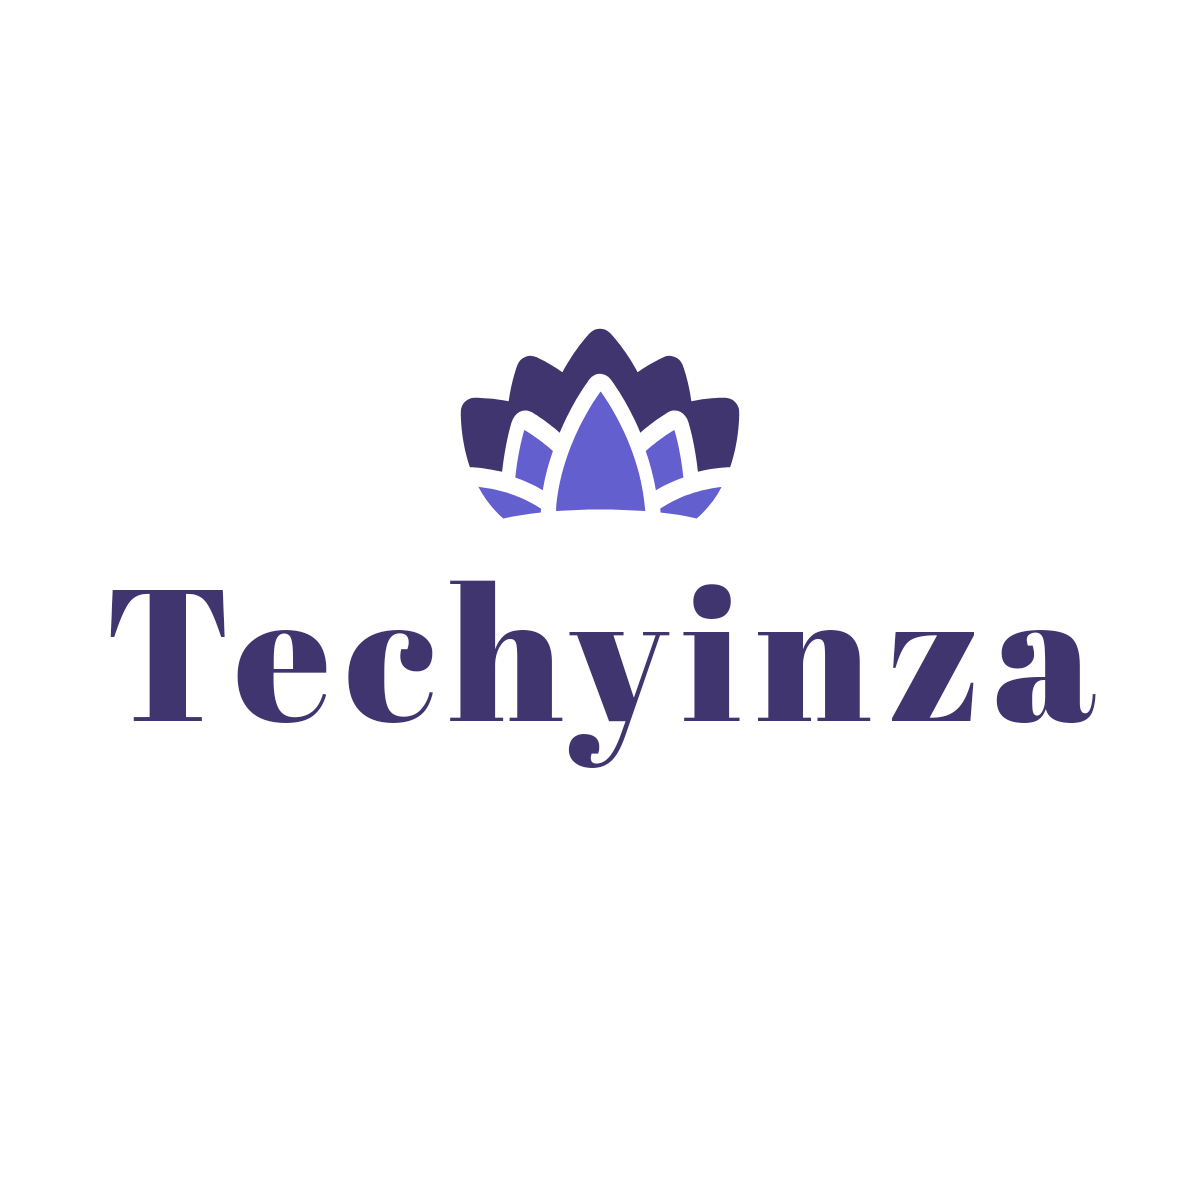 Techyinza - All About Technology